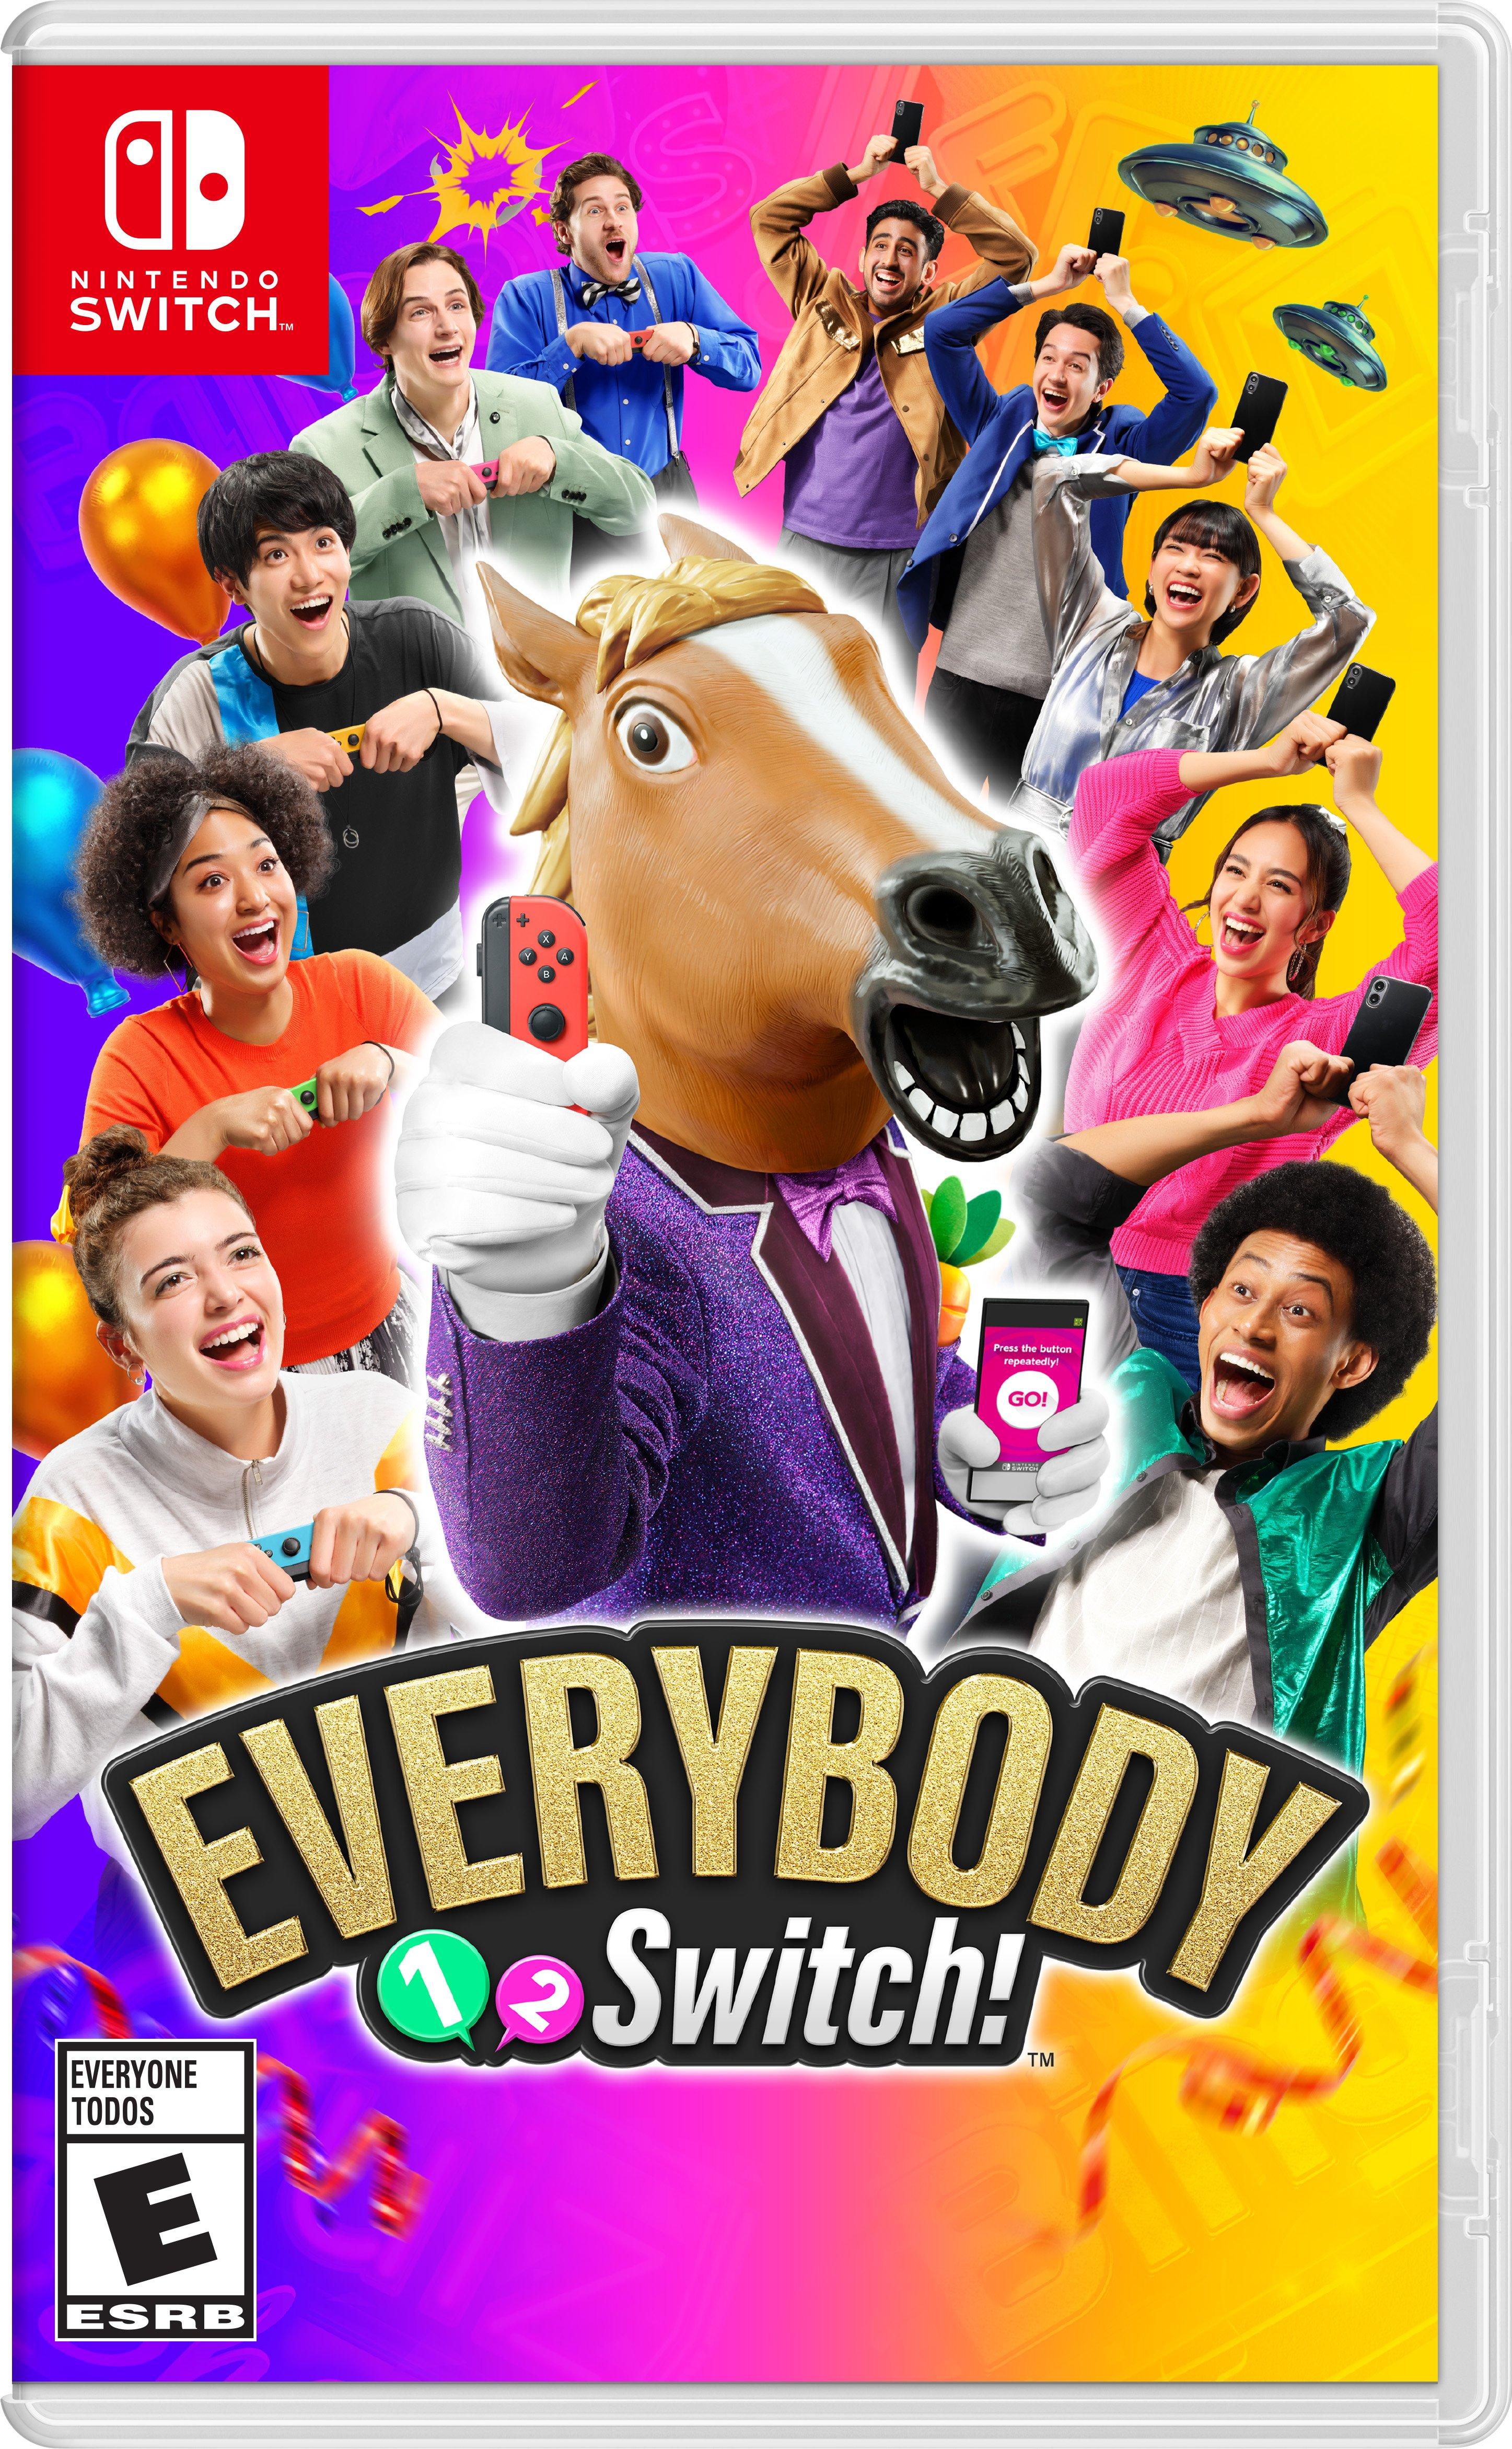 Everybody 1-2 Switch! - Nintendo | Switch GameStop | Nintendo Switch